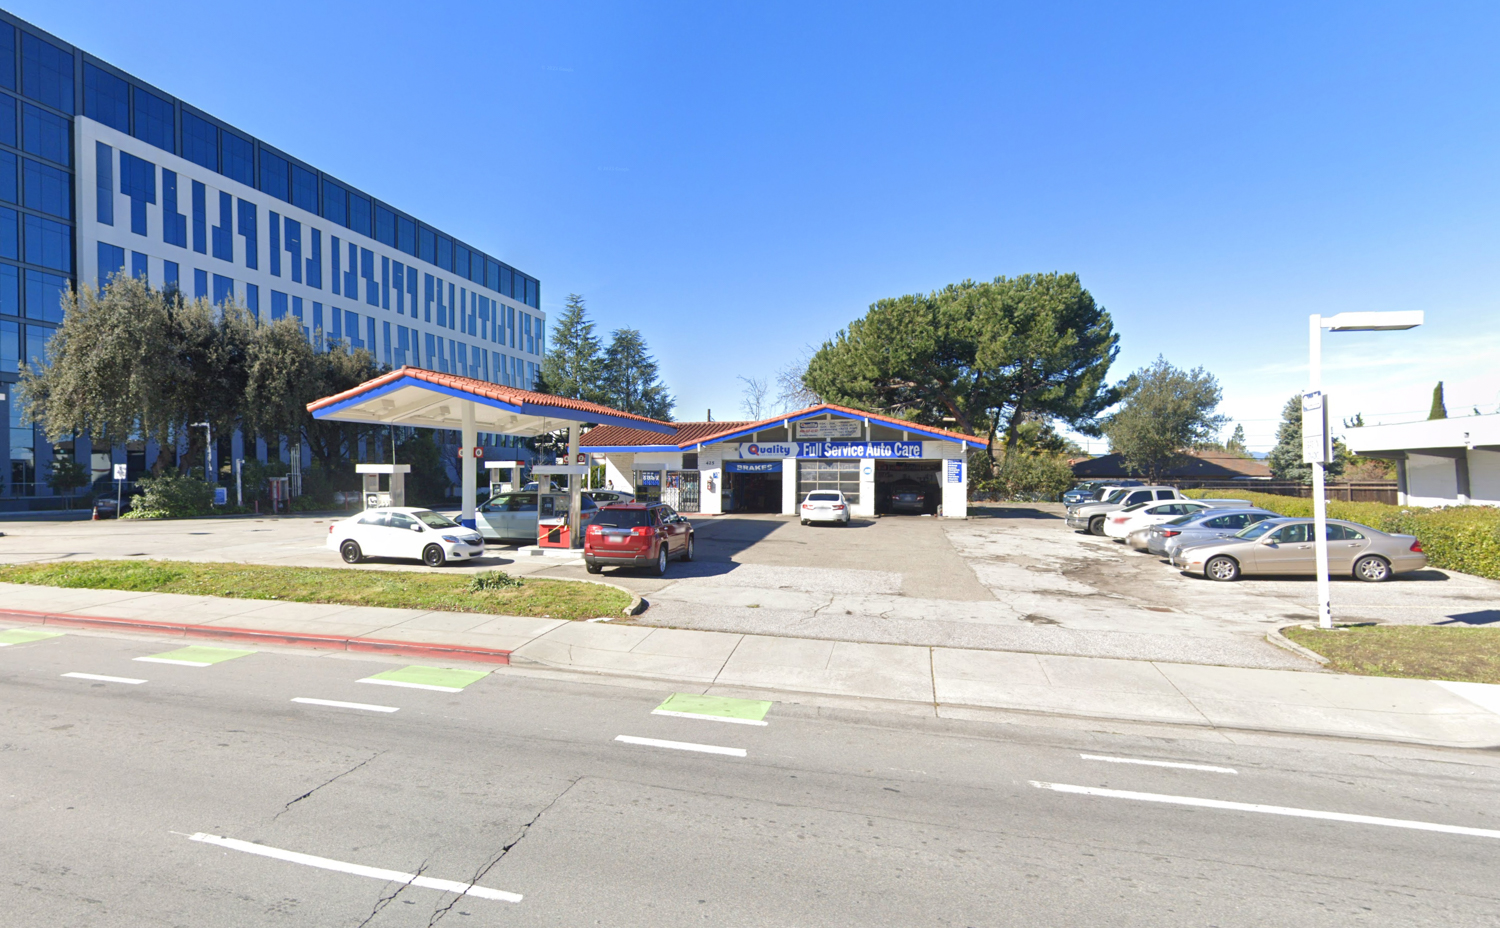 425 South Winchester Boulevard, image via Google Street View